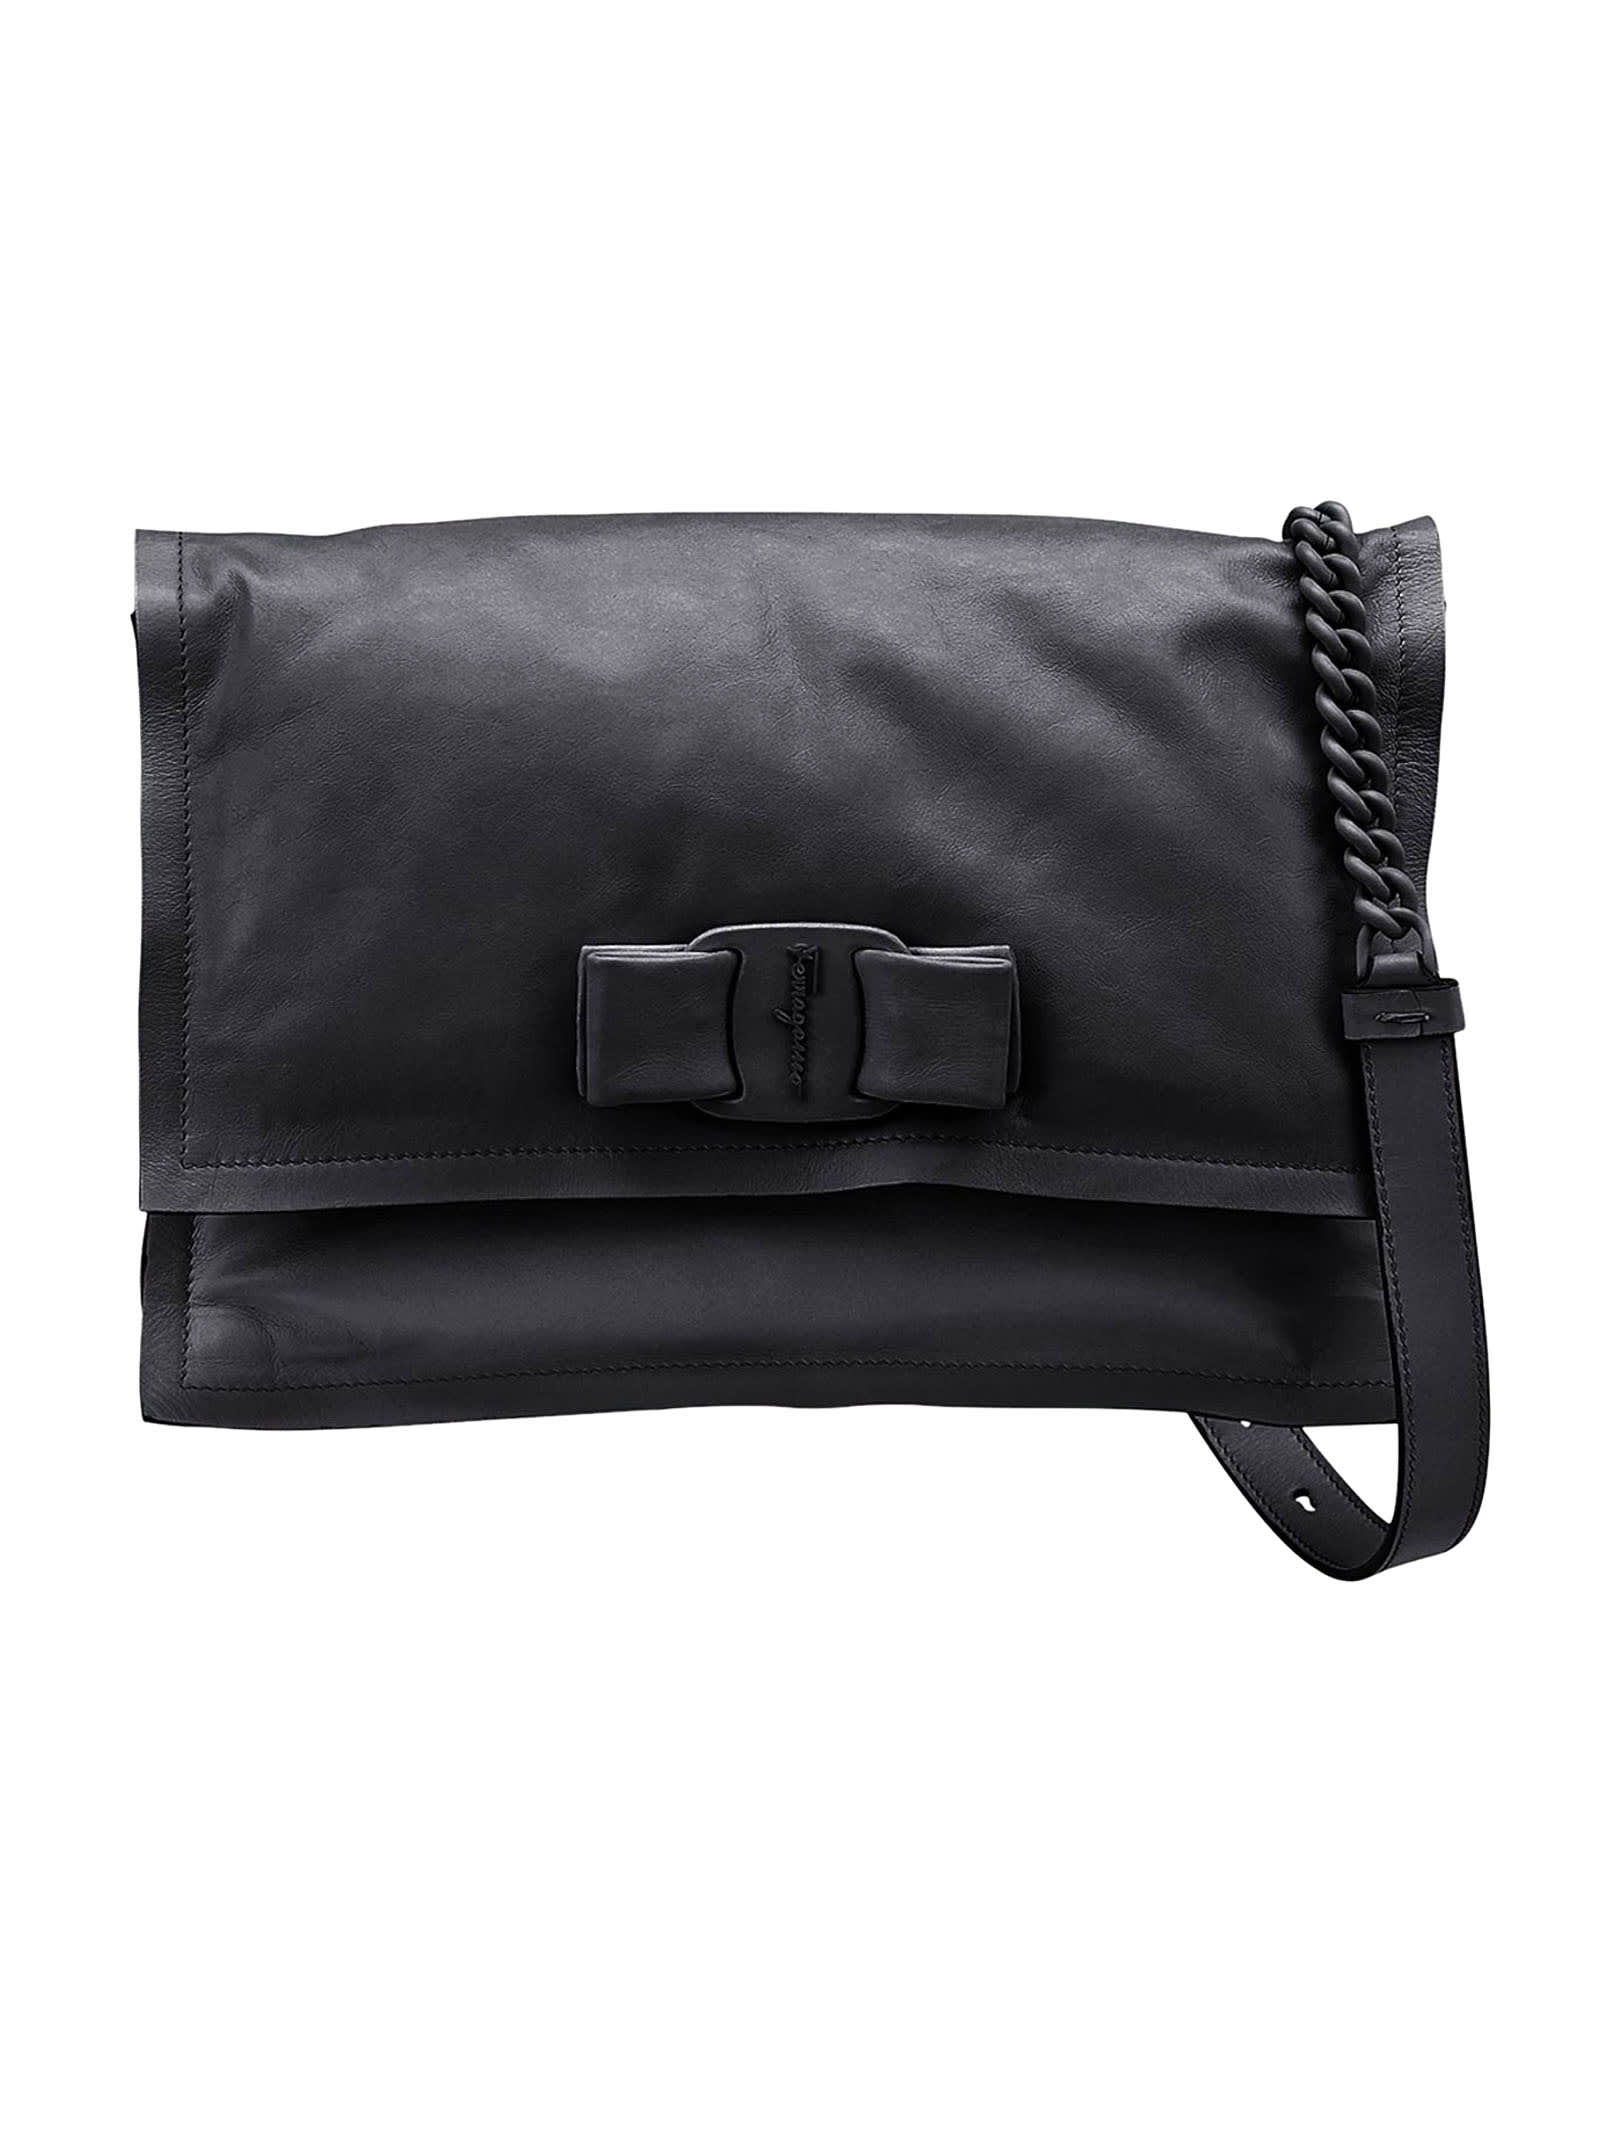 Salvatore Ferragamo Black Leather Viva Bow Shoulder Bag